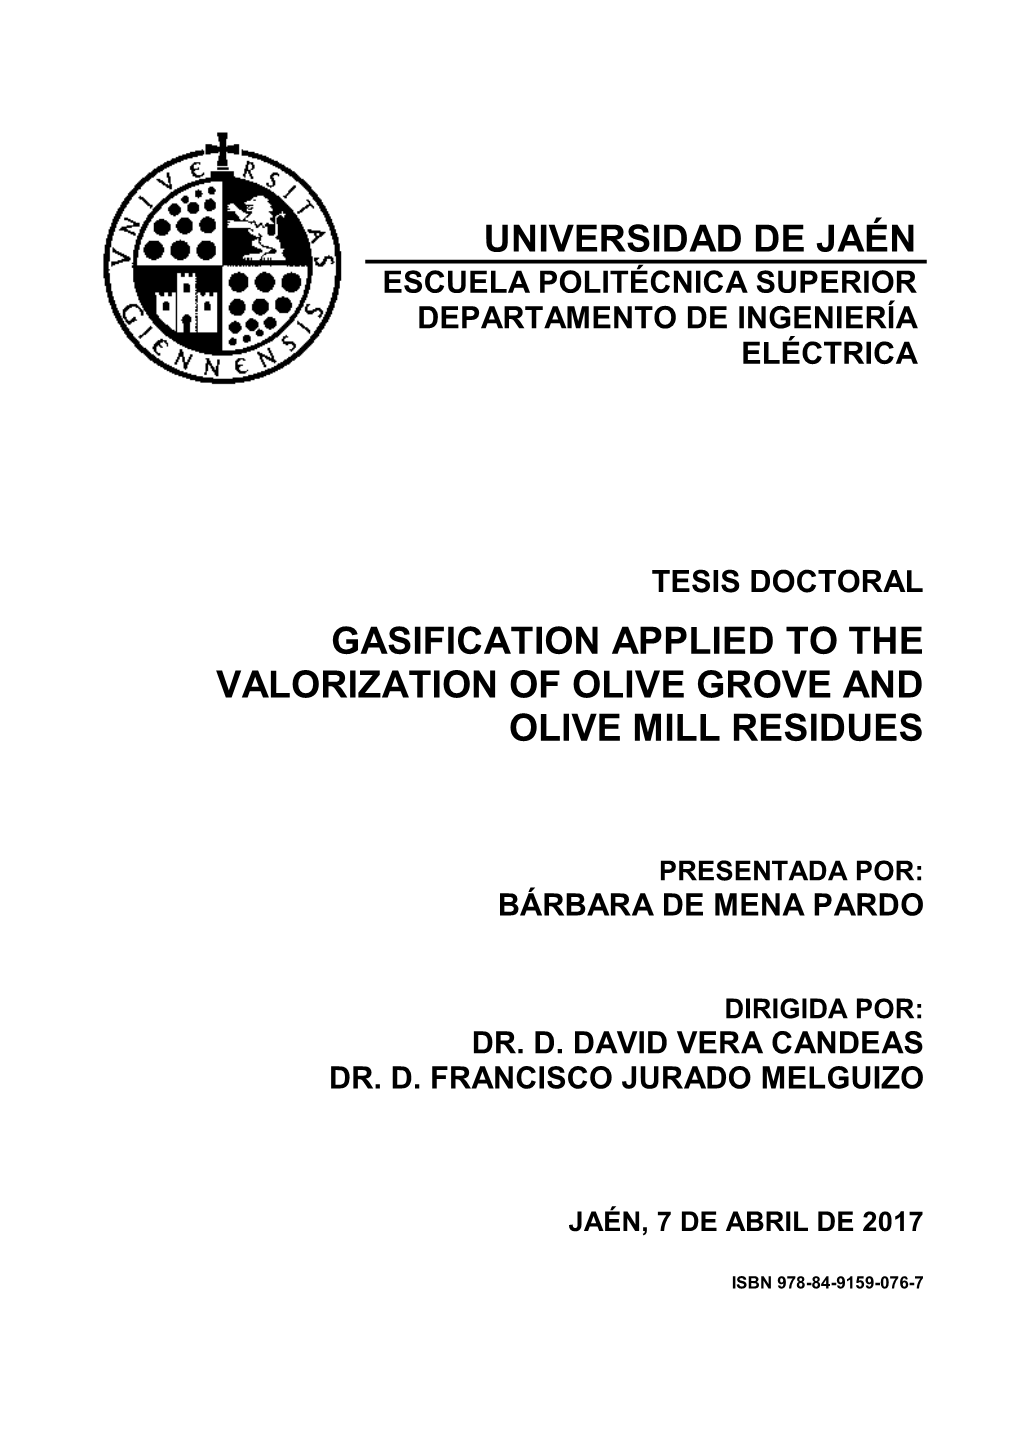 Universidad De Jaén Gasification Applied to The